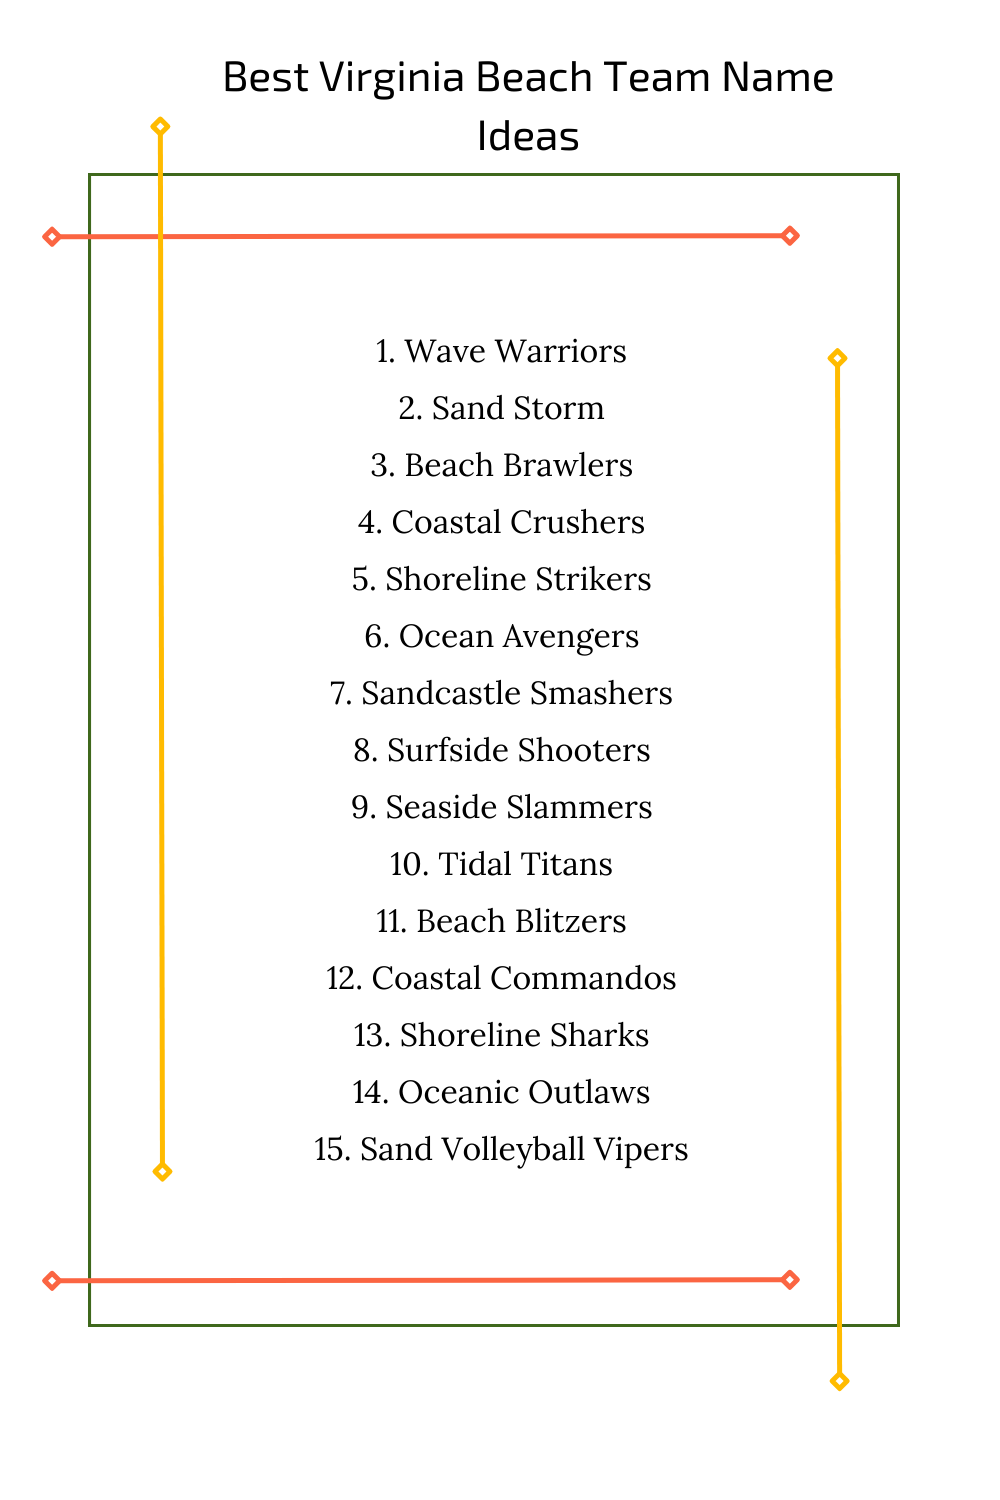 Best Virginia Beach Team Name Ideas